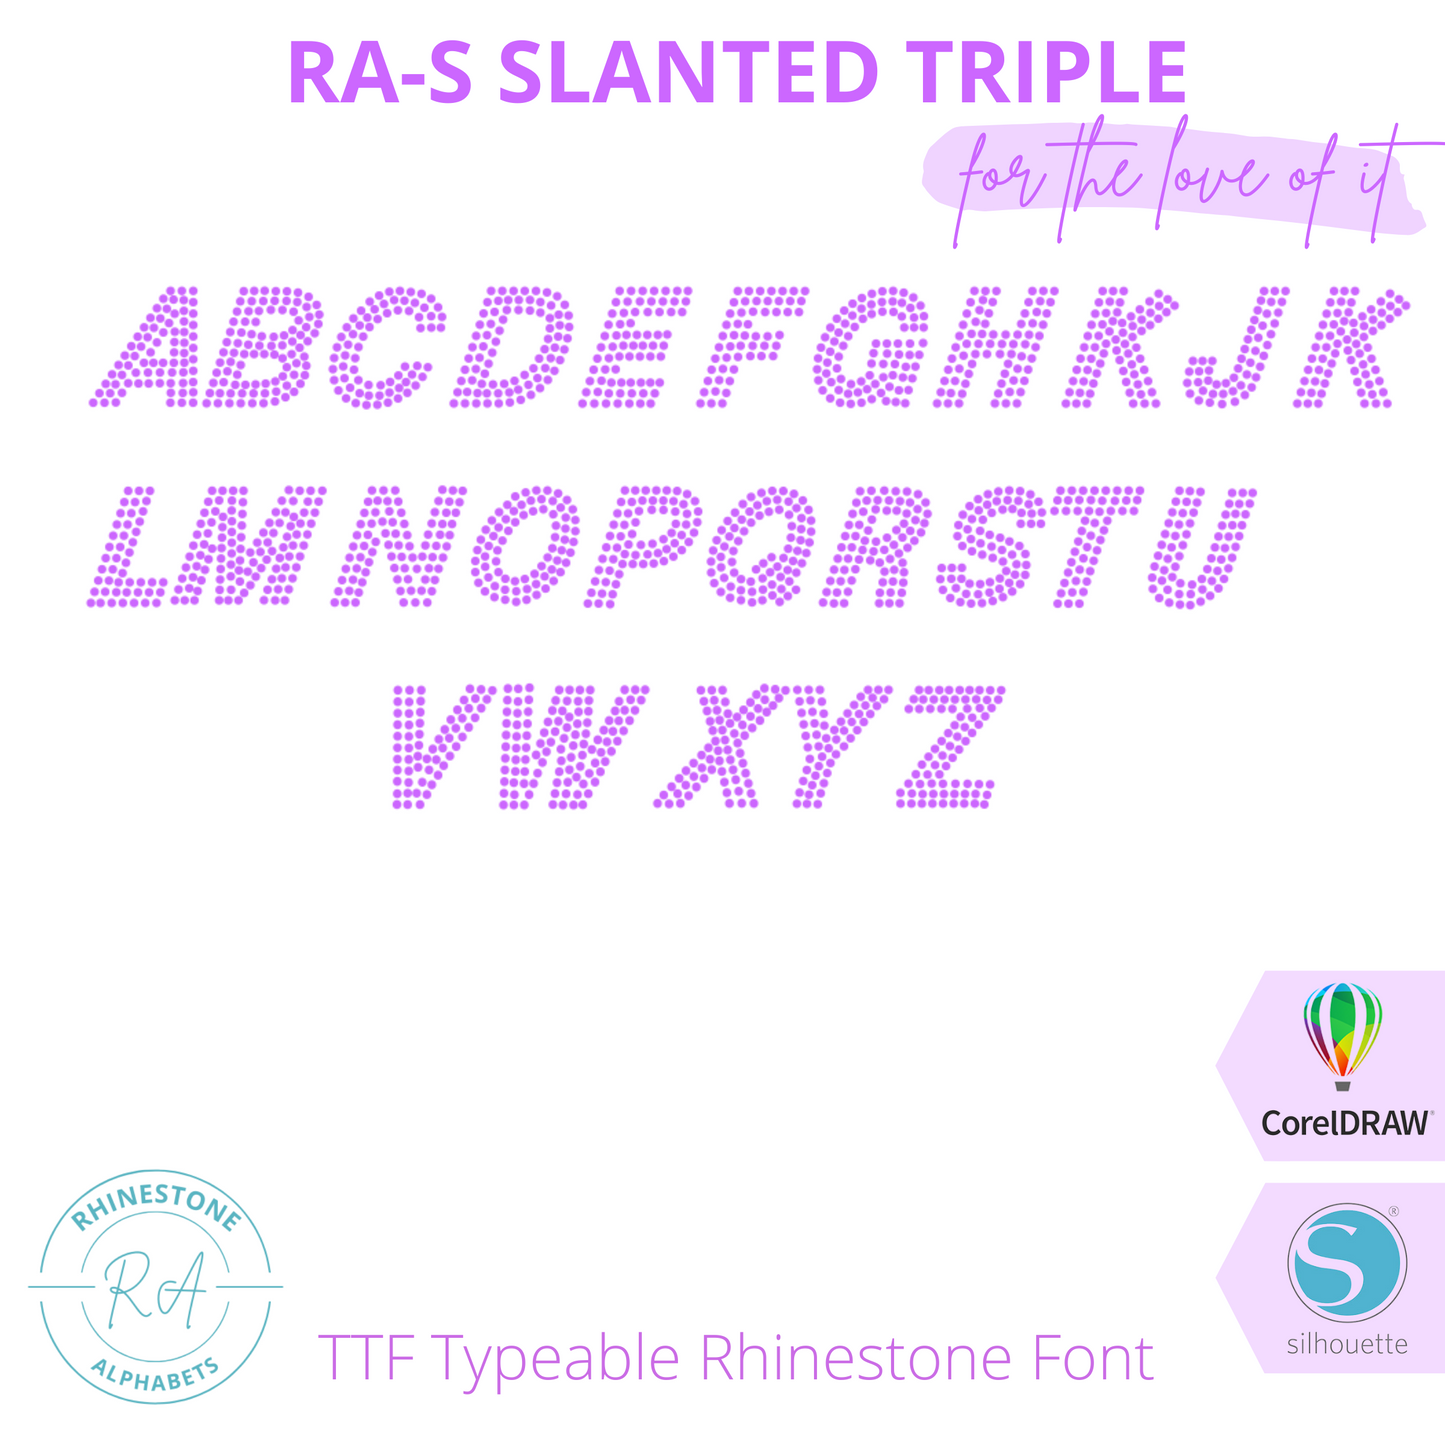 RA-S Slanted Triple - RhinestoneAlphabets